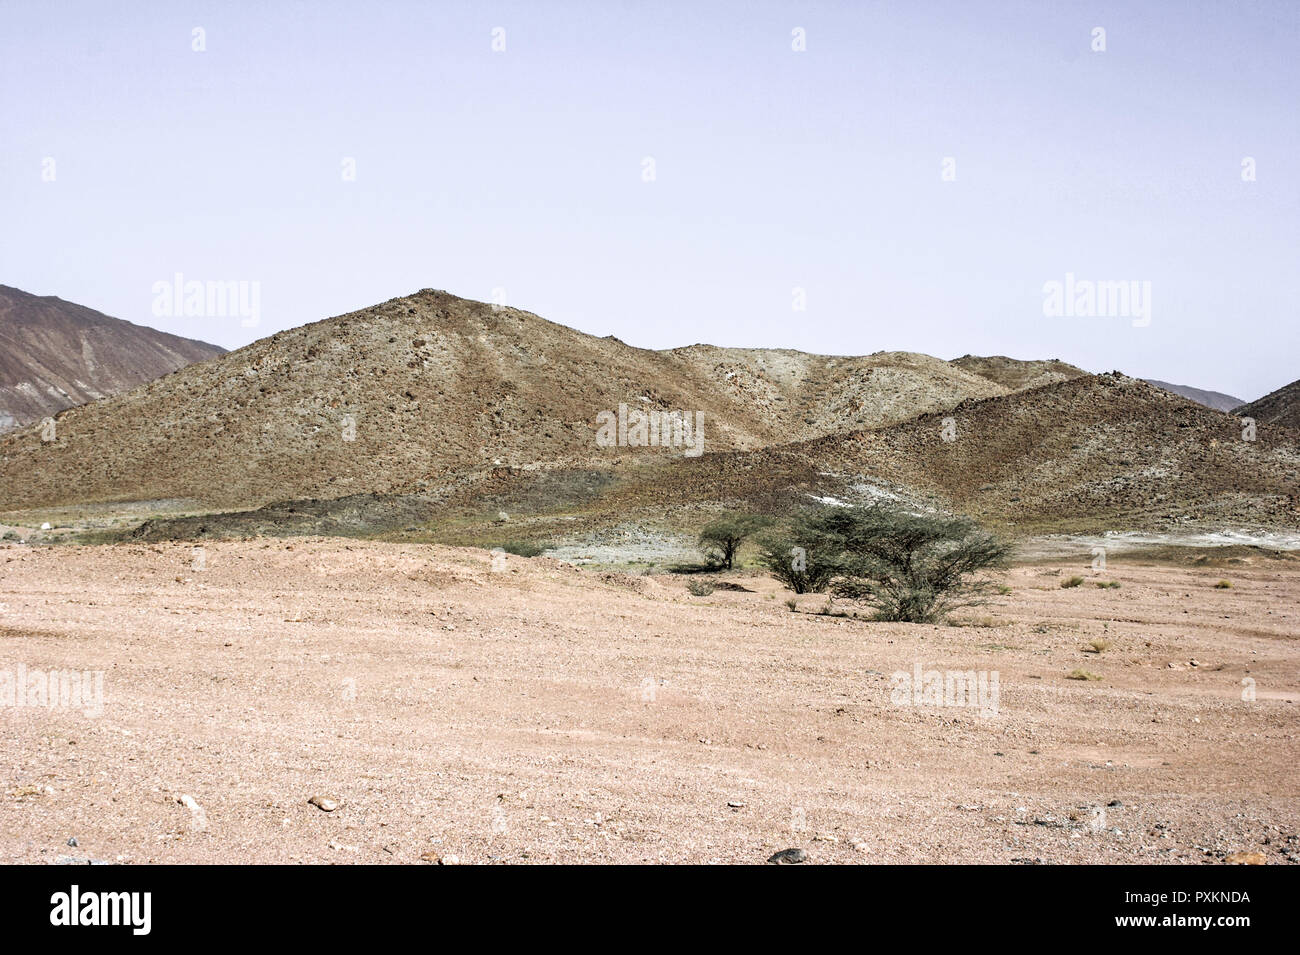 Oman Arabische Halbinsel Naher Osten Sultanat Steinwueste Berge nahe Suma il Pass Hajar al-Gharbi Haja Gebirge Berglandschaft Tourismus Reisen Geograp Stock Photo